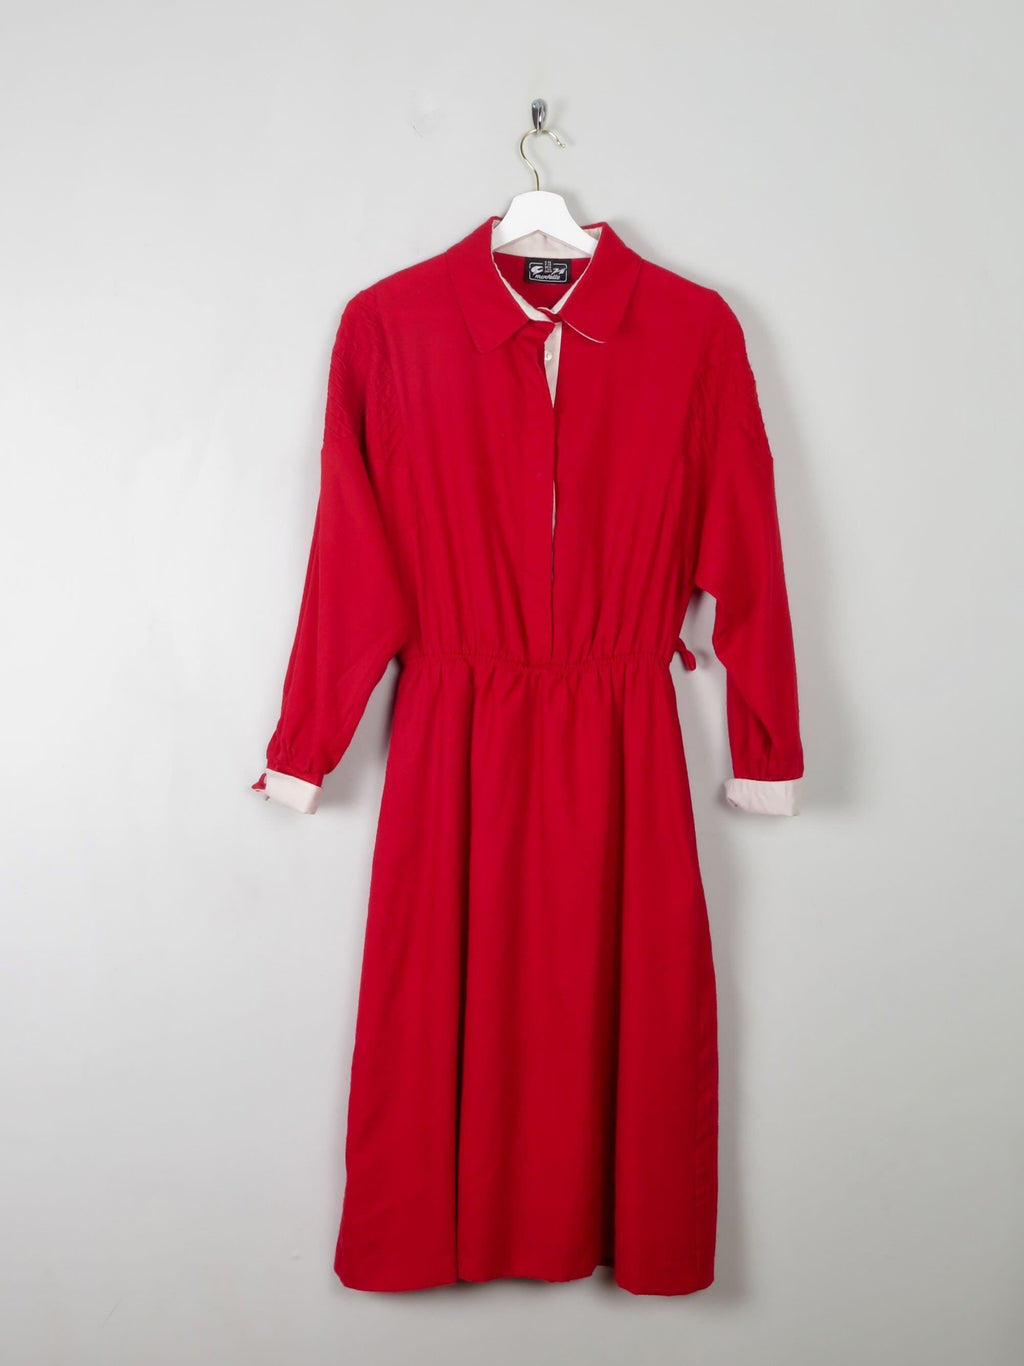 Vintage Red Shirt Dress S/M - The Harlequin